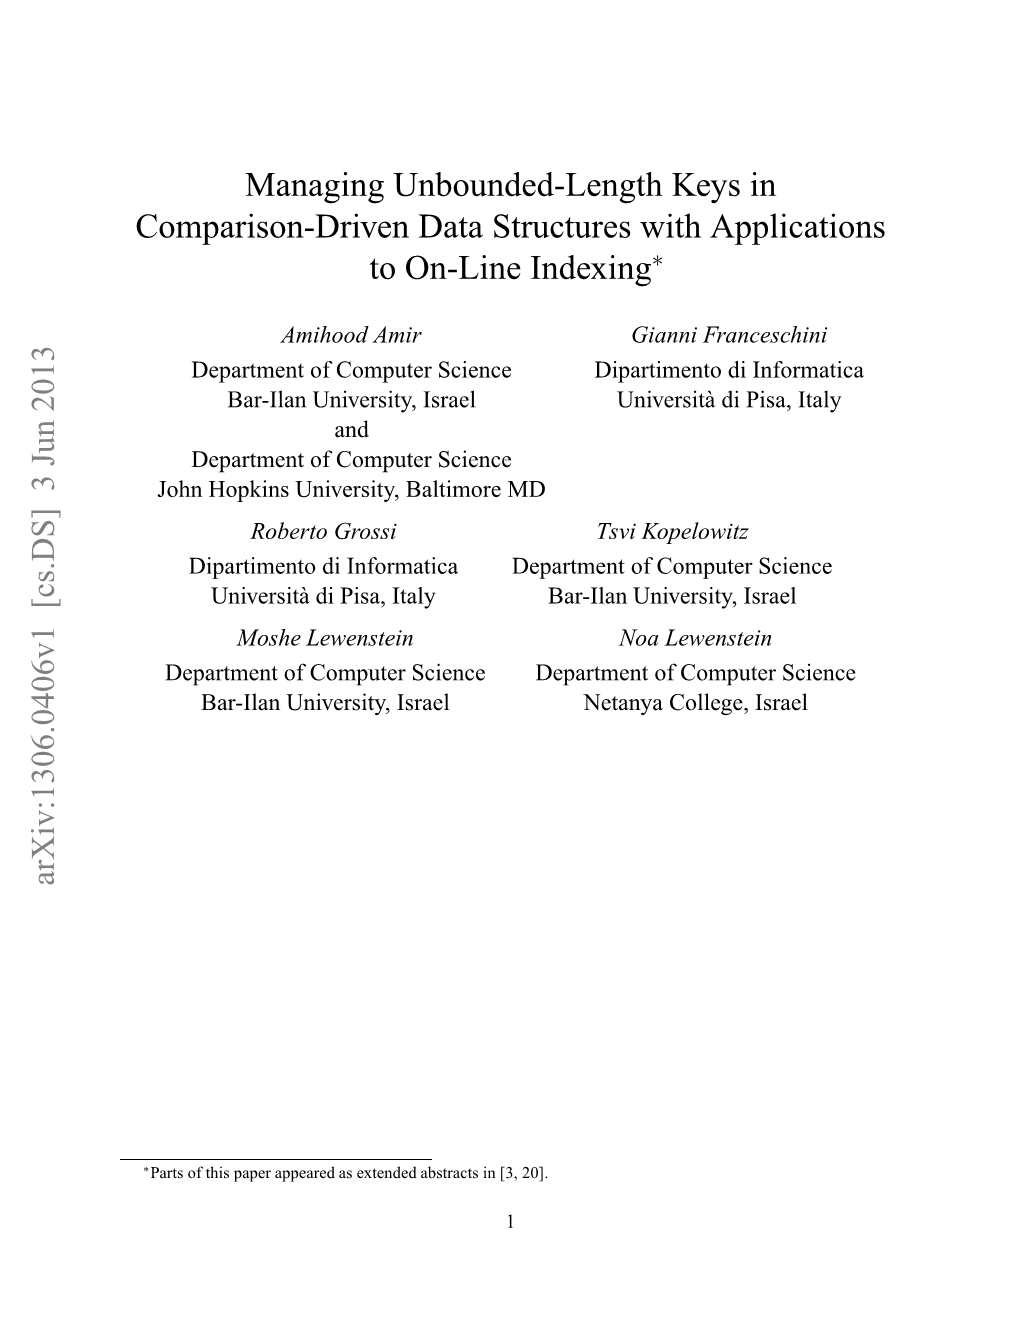 Managing Unbounded-Length Keys in Comparison-Driven Data